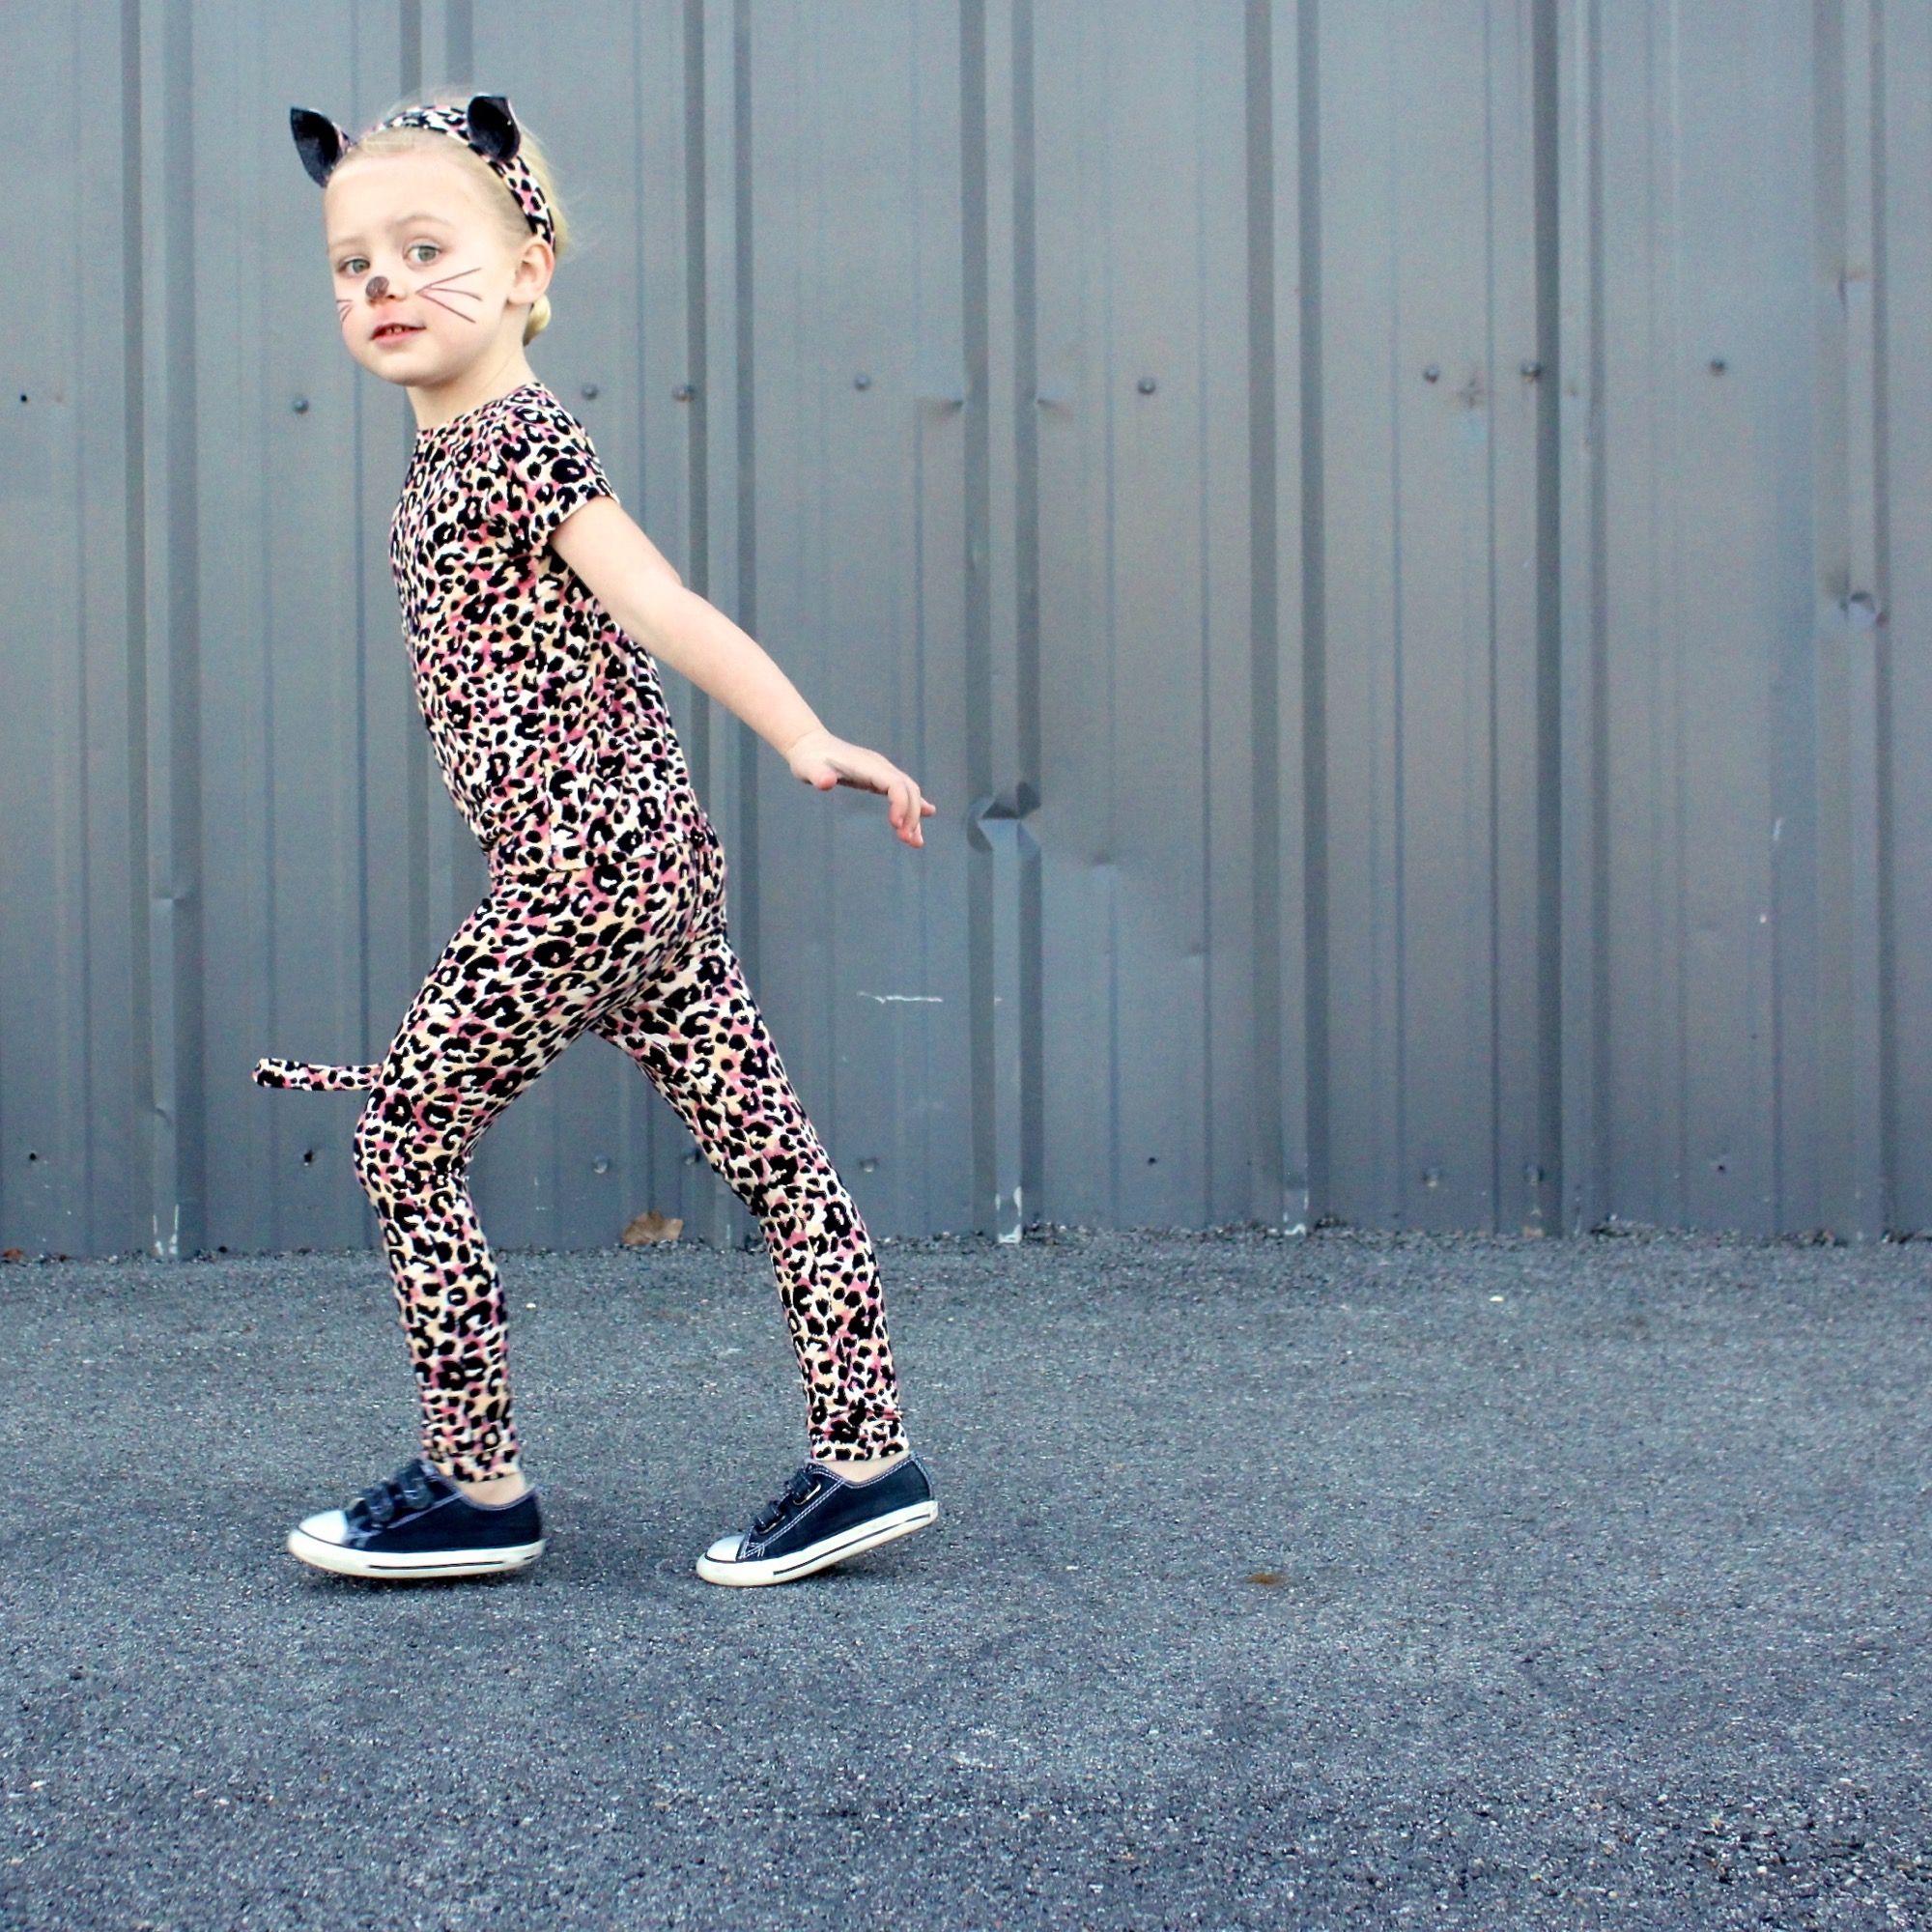 Details about   Leopard Cheetah Kitty CAT EARS HEADBAND Children Adults Halloween costume 